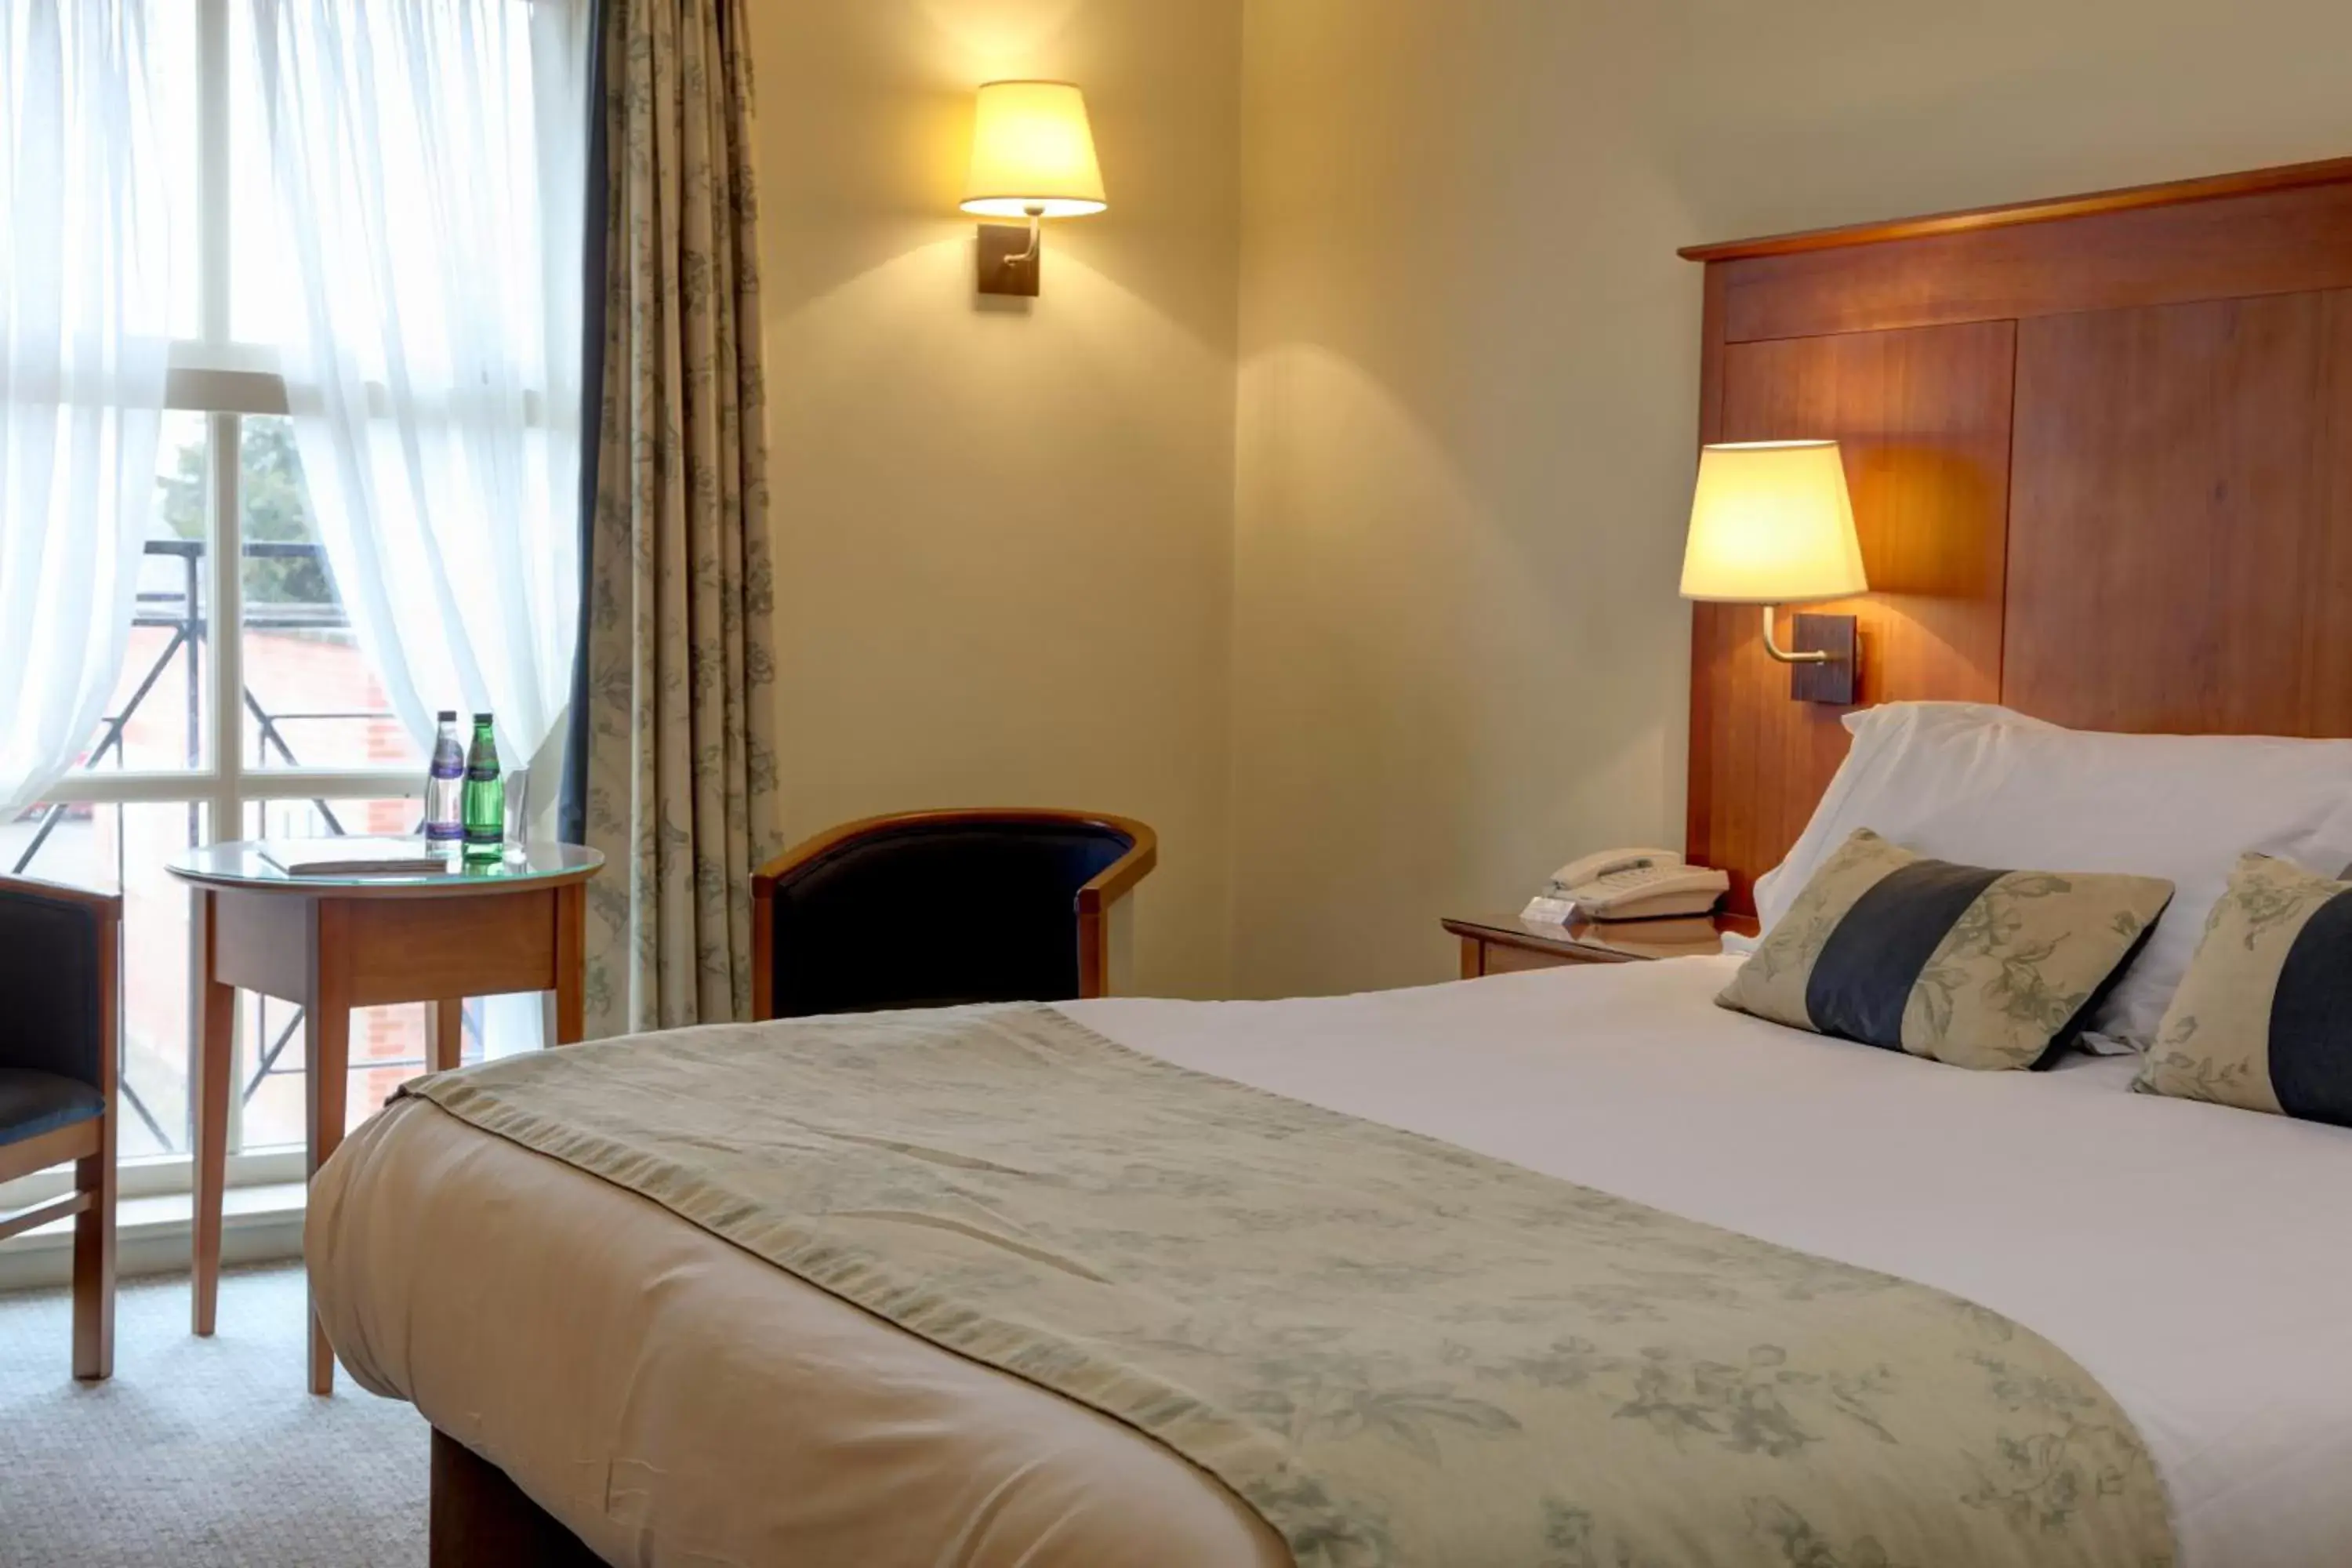 Bed, Room Photo in Rossett Hall Hotel